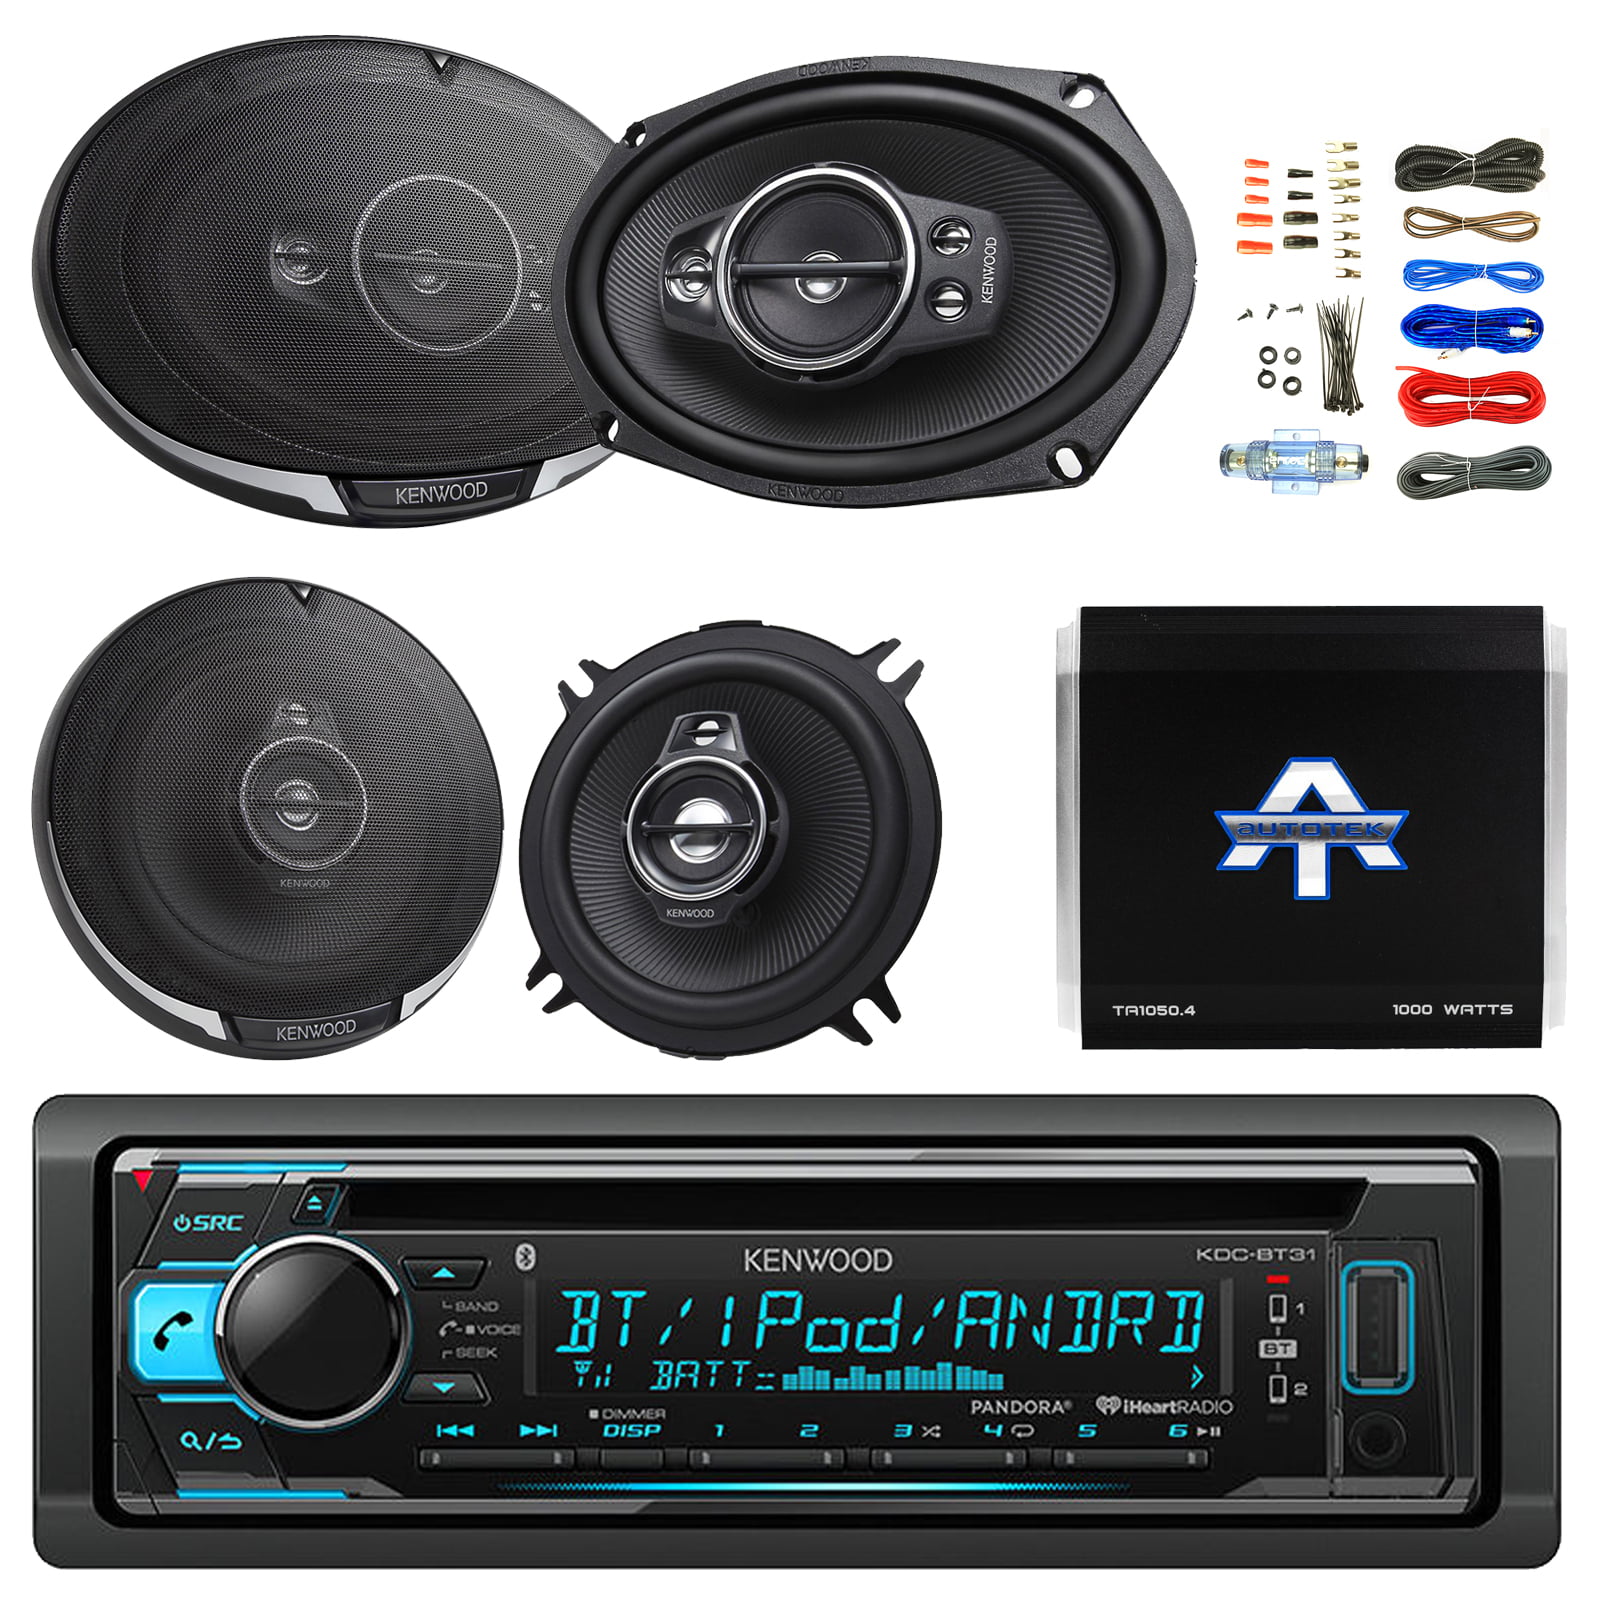 Kenwood Single DIN Bluetooth CD/AM/FM Car Stereo Receiver Bundle Combo